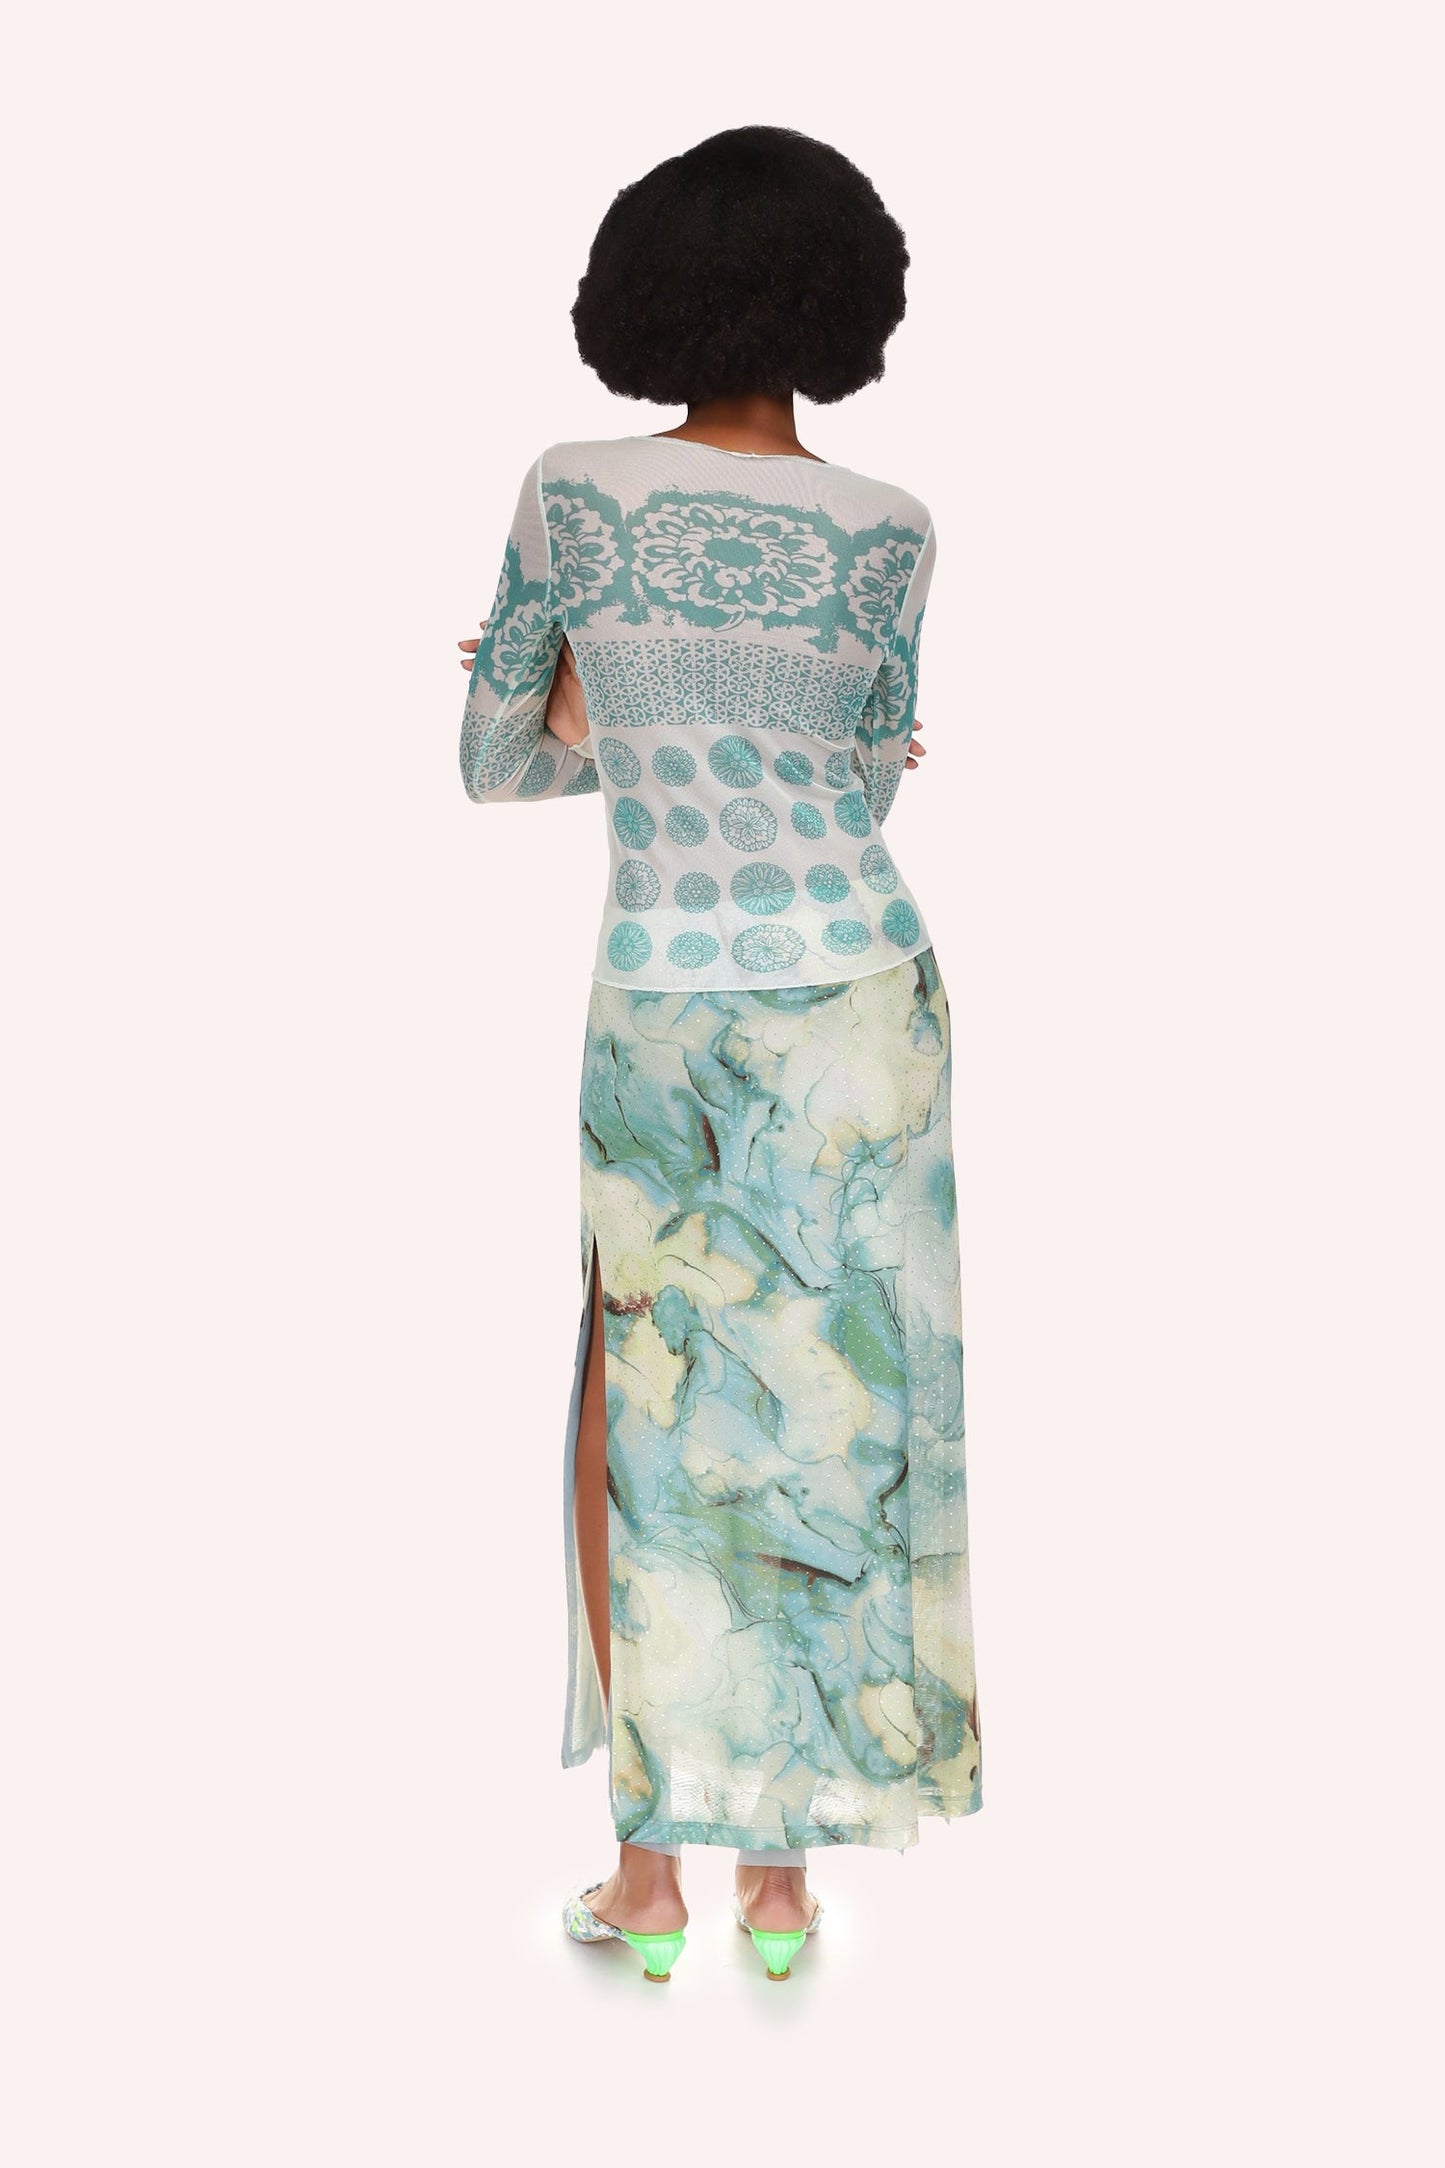 Printed Chrysanthemum Mesh Top paired with Cosmos Mesh Skirt